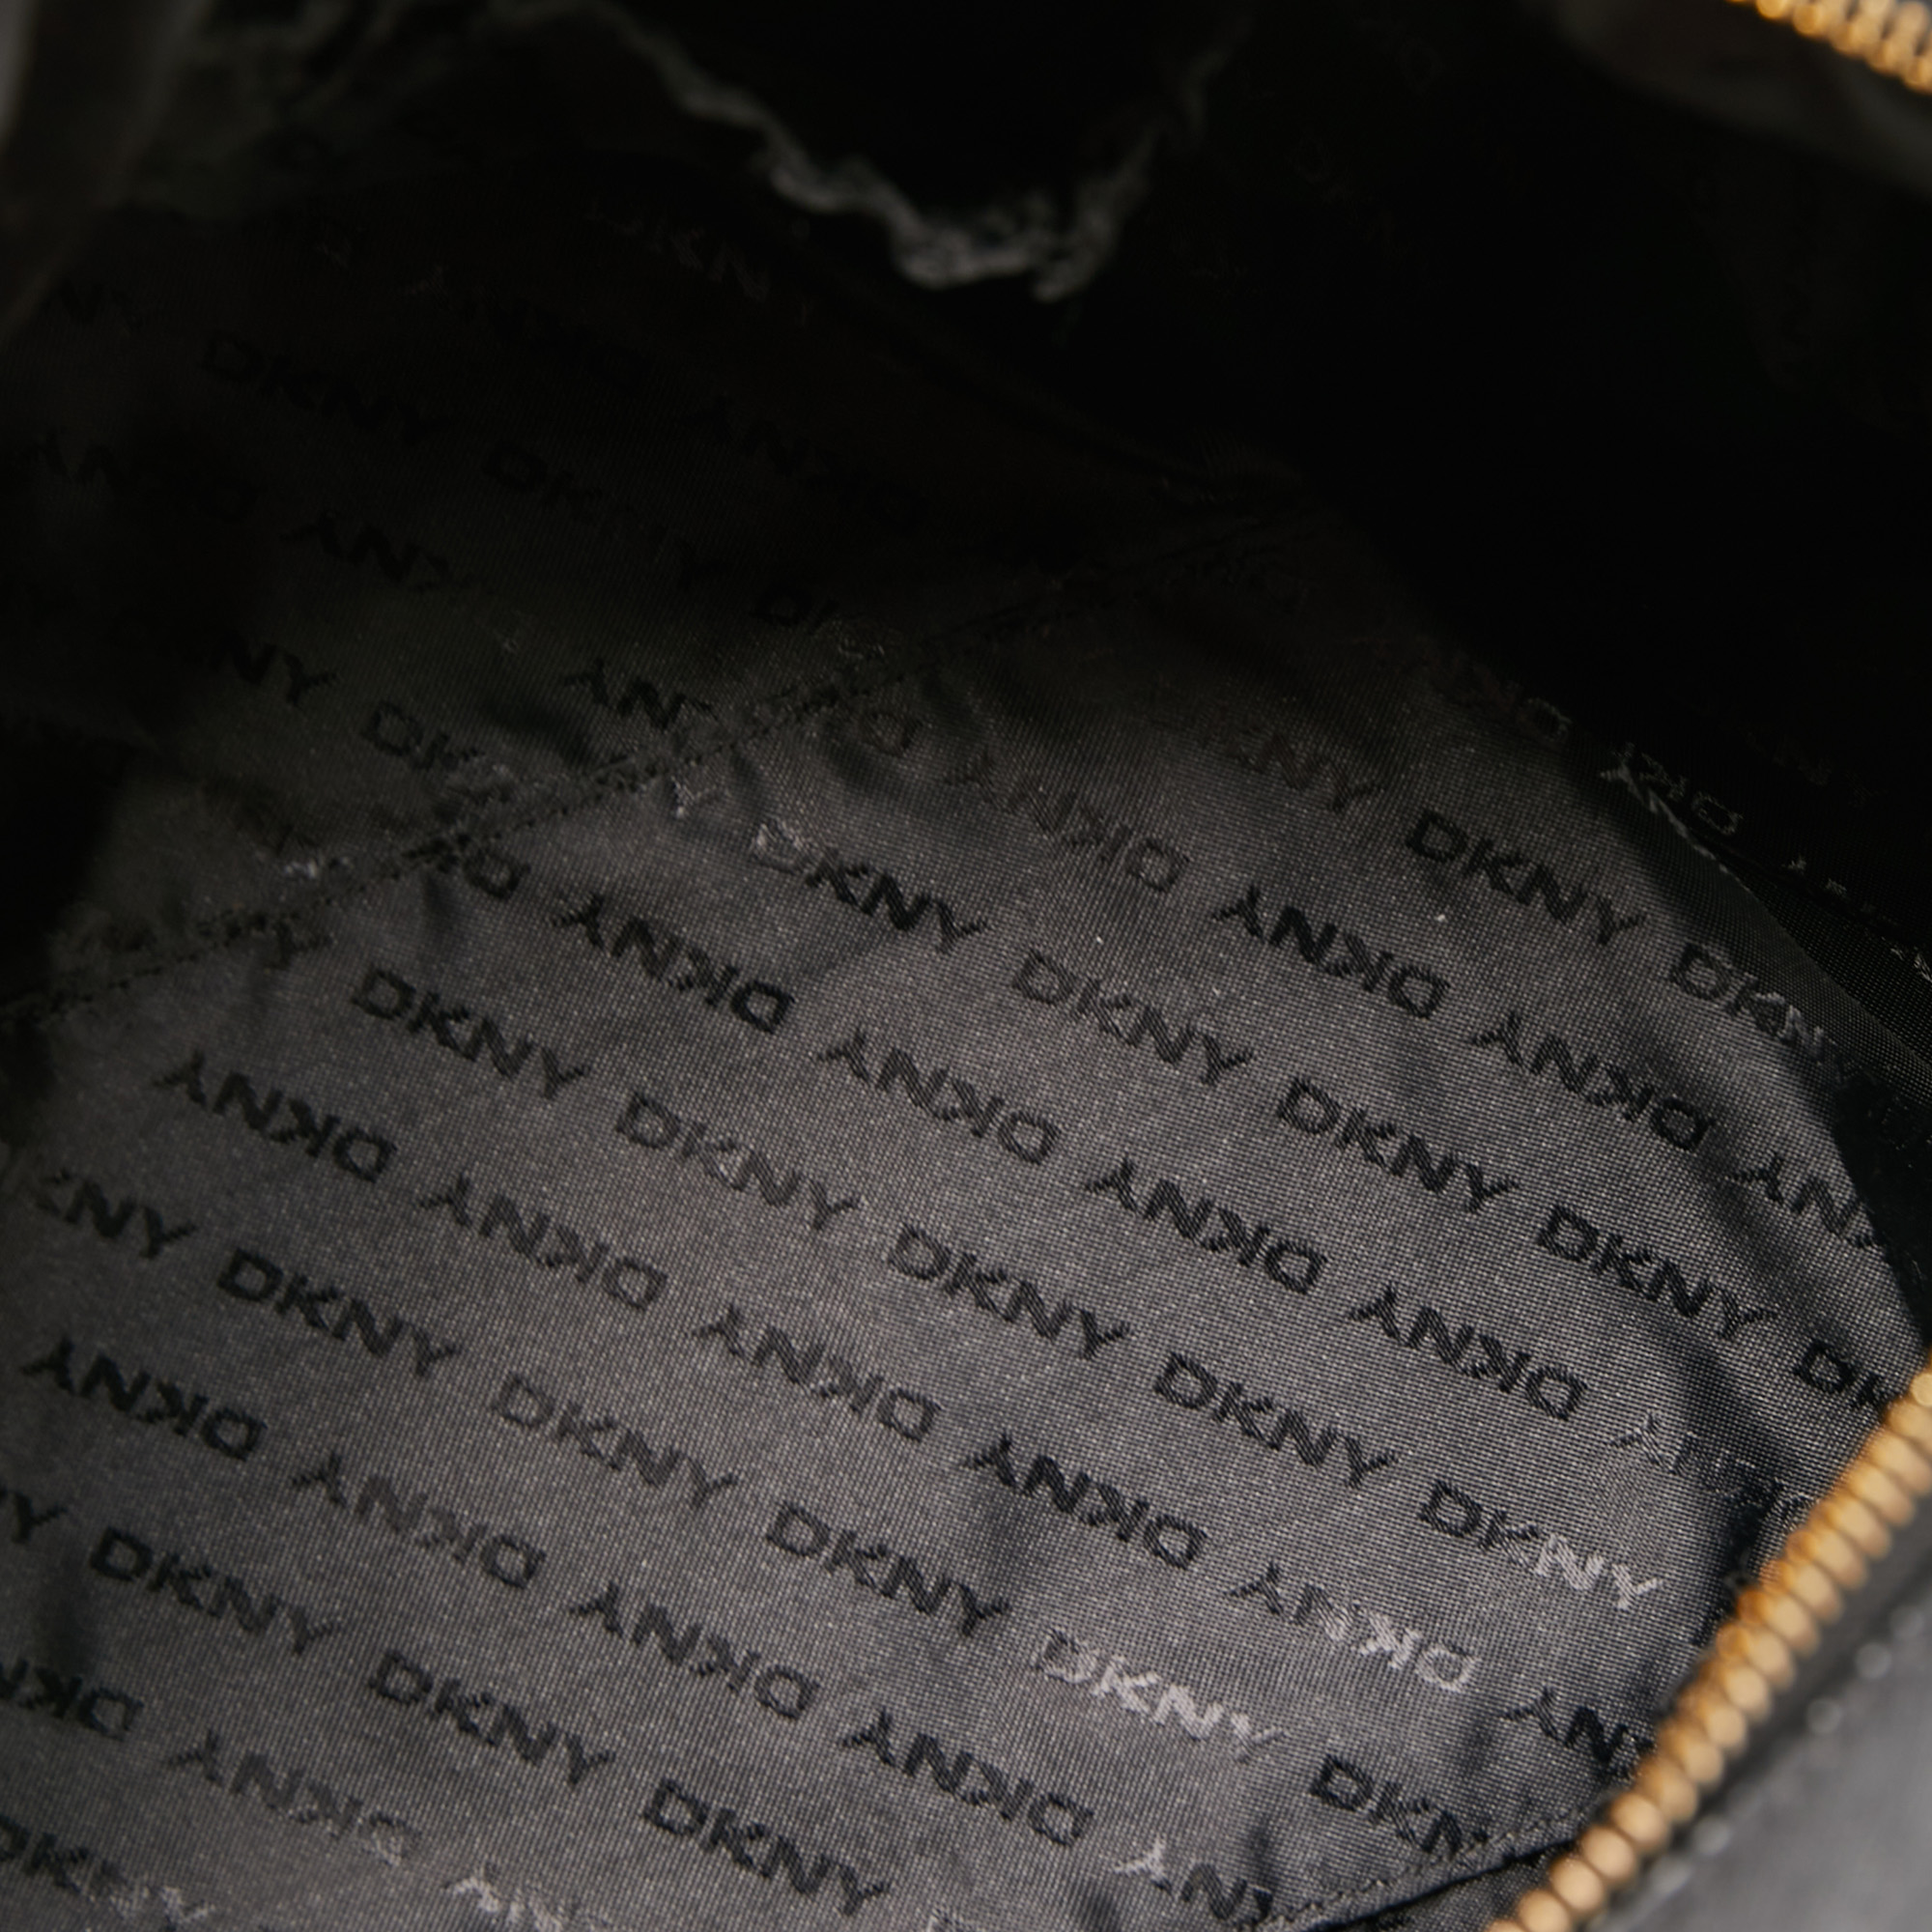 DKNY Black Saffiano Leather Zip Boston Bag